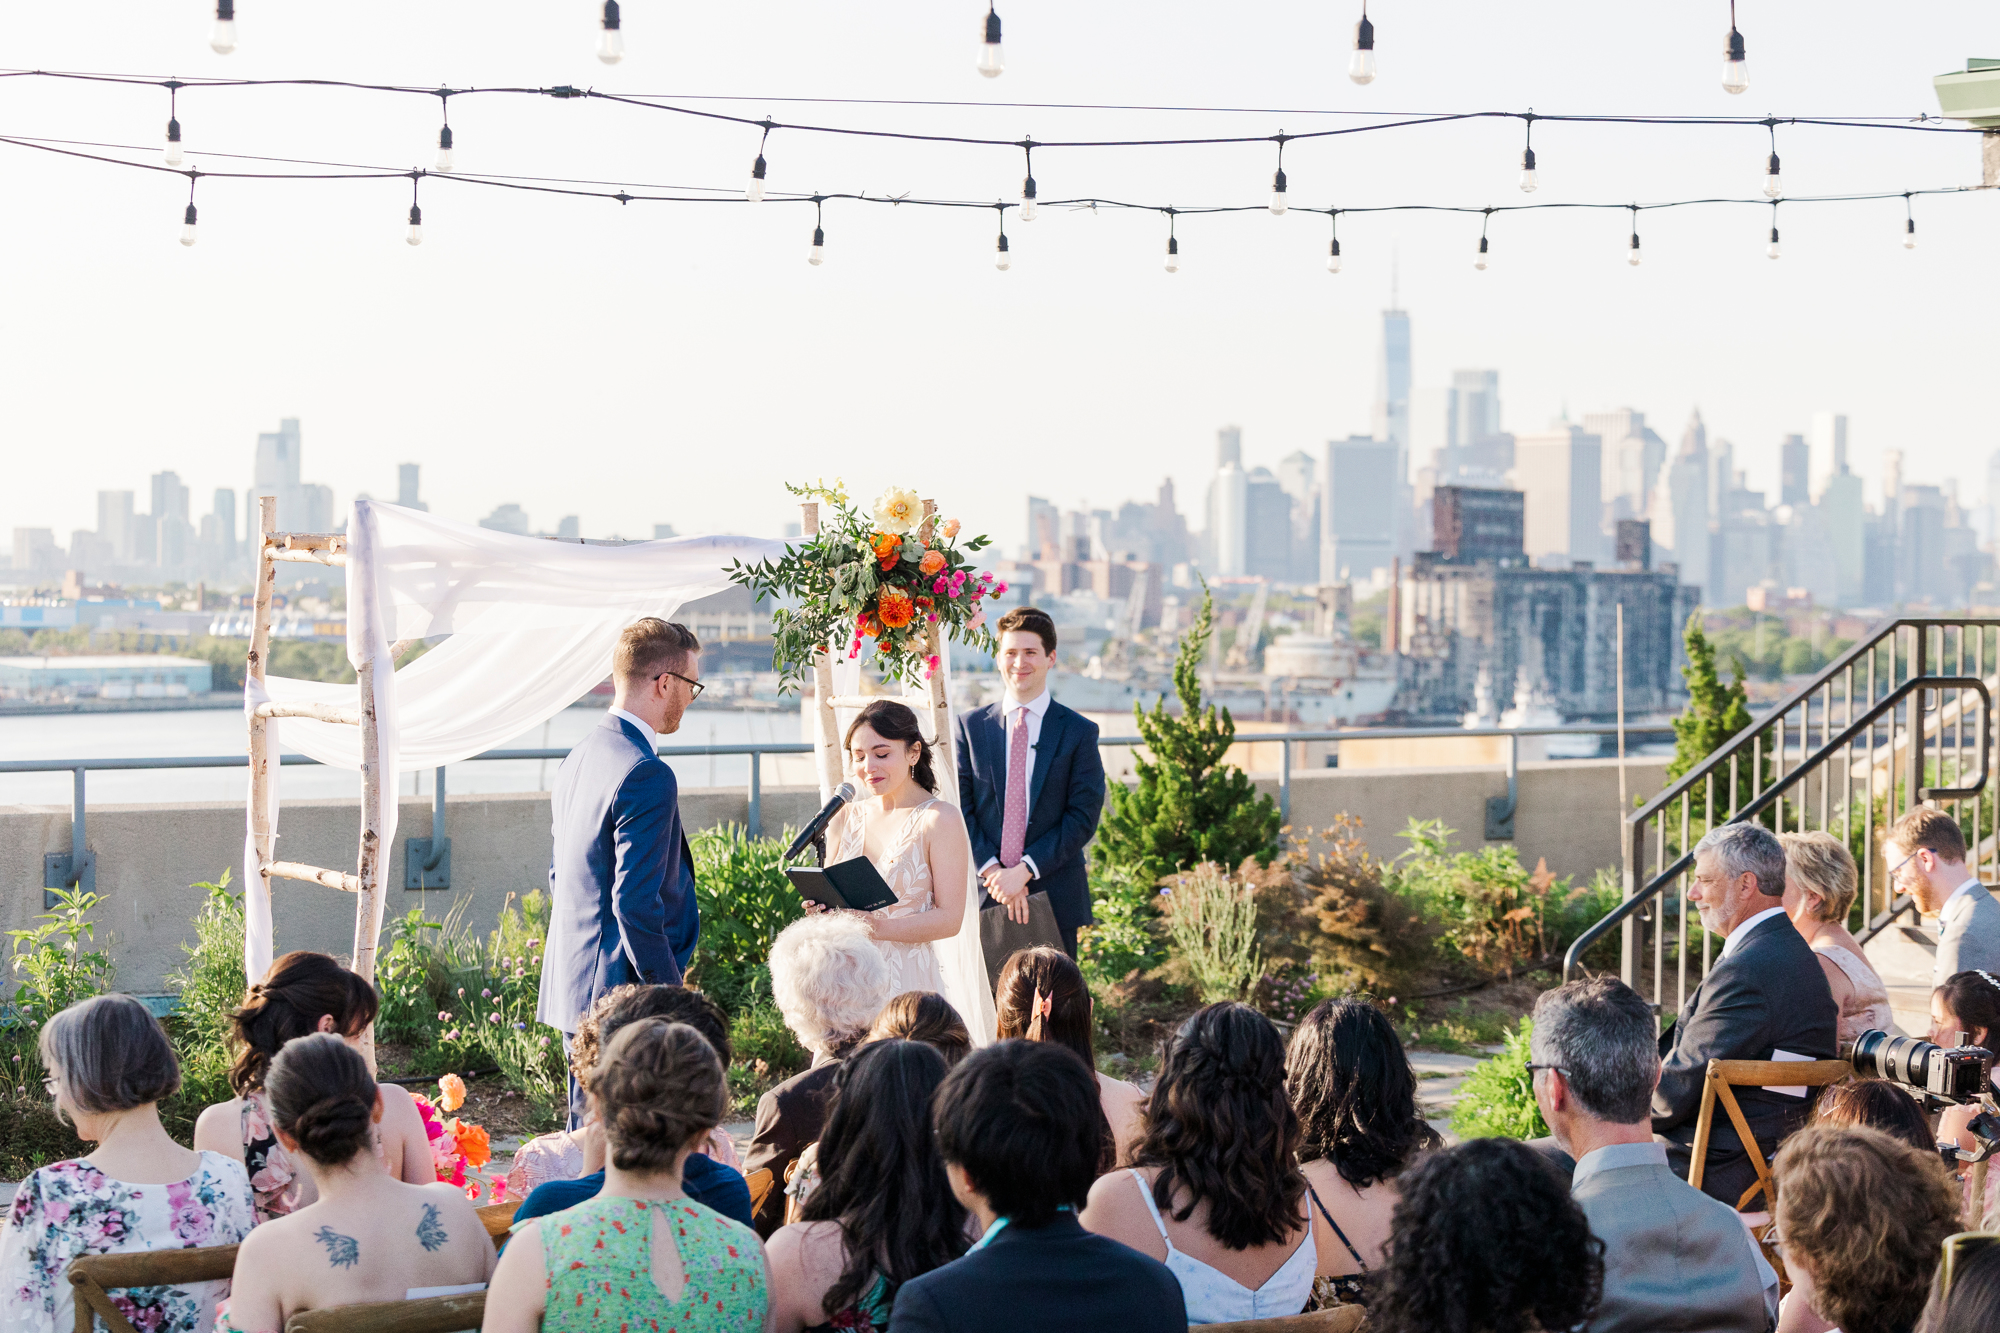 Radiant Wedding at Brooklyn Grange in Sunset Park